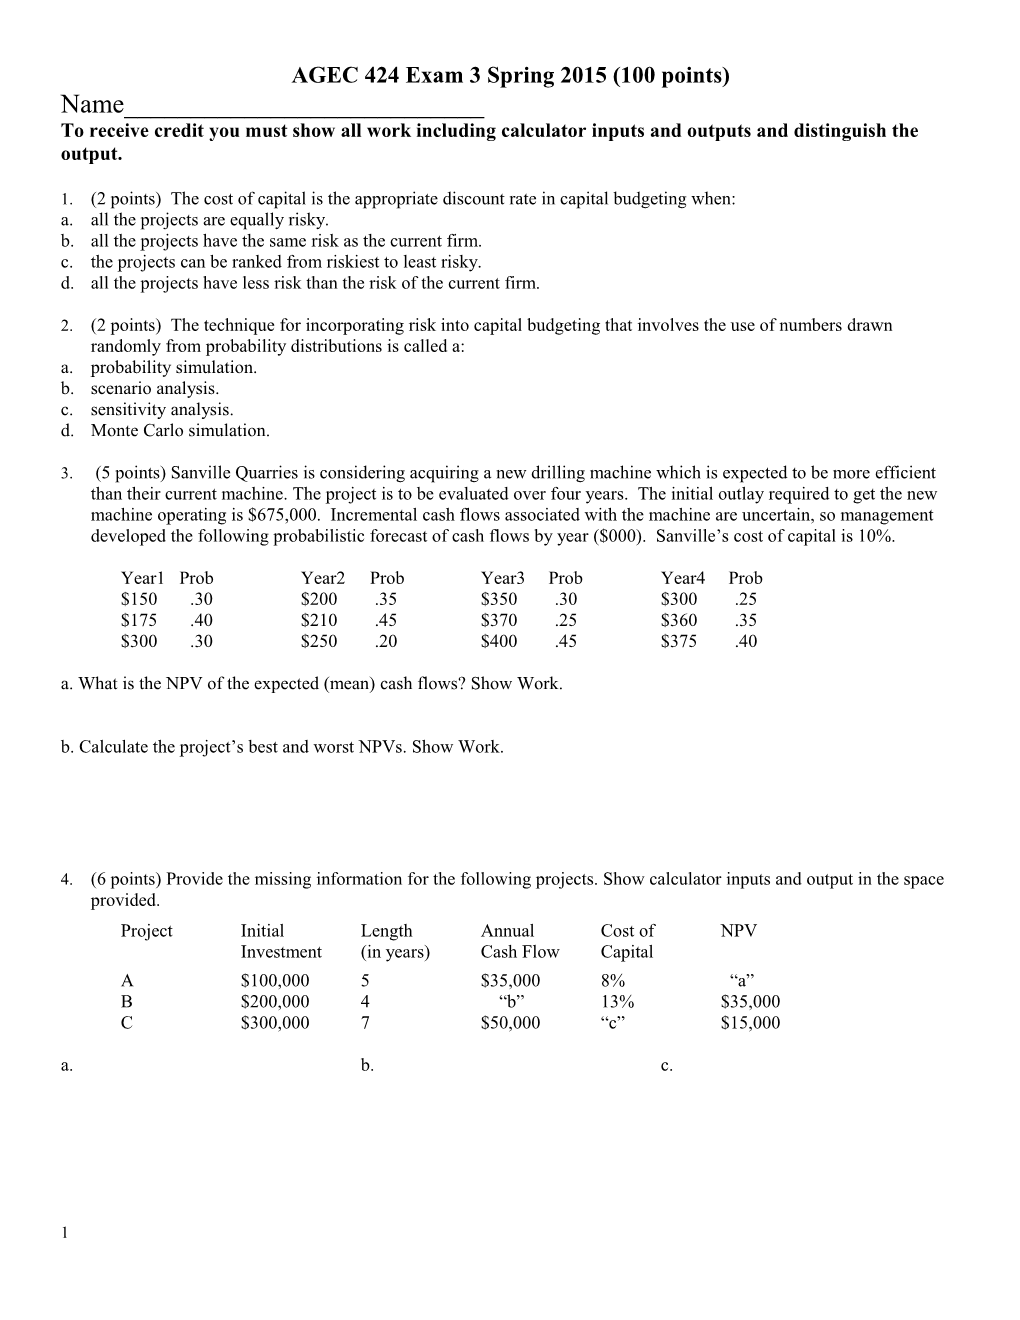 AGEC 424 Exam 3 Spring 2015 (100 Points)